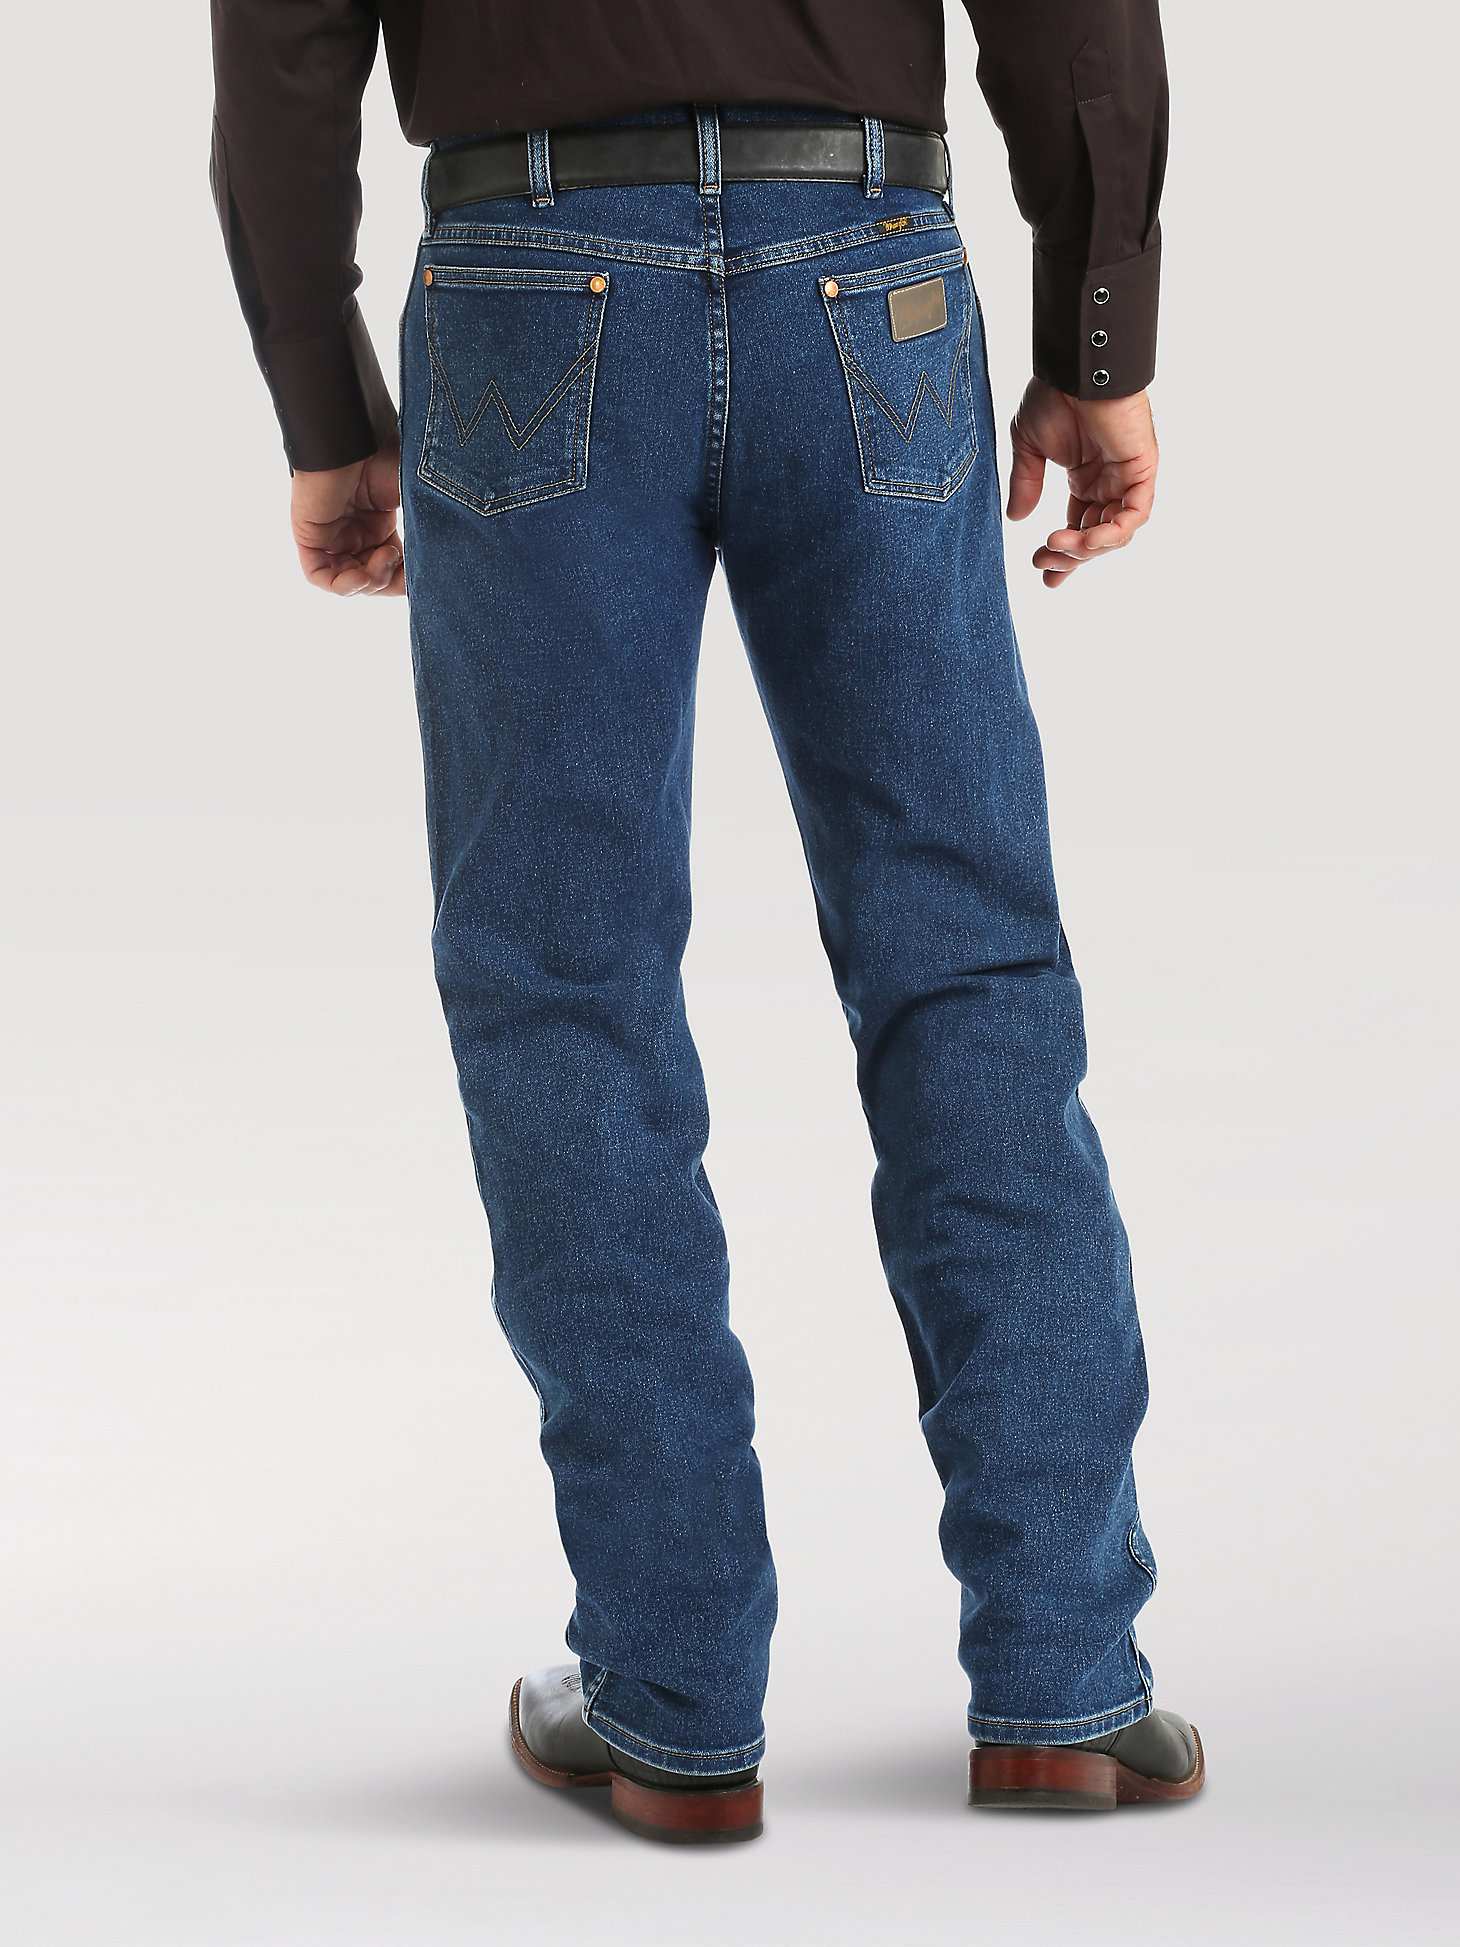 Wrangler® Cowboy Cut® Original Fit Active Flex Jeans in Stonewash alternative view 3